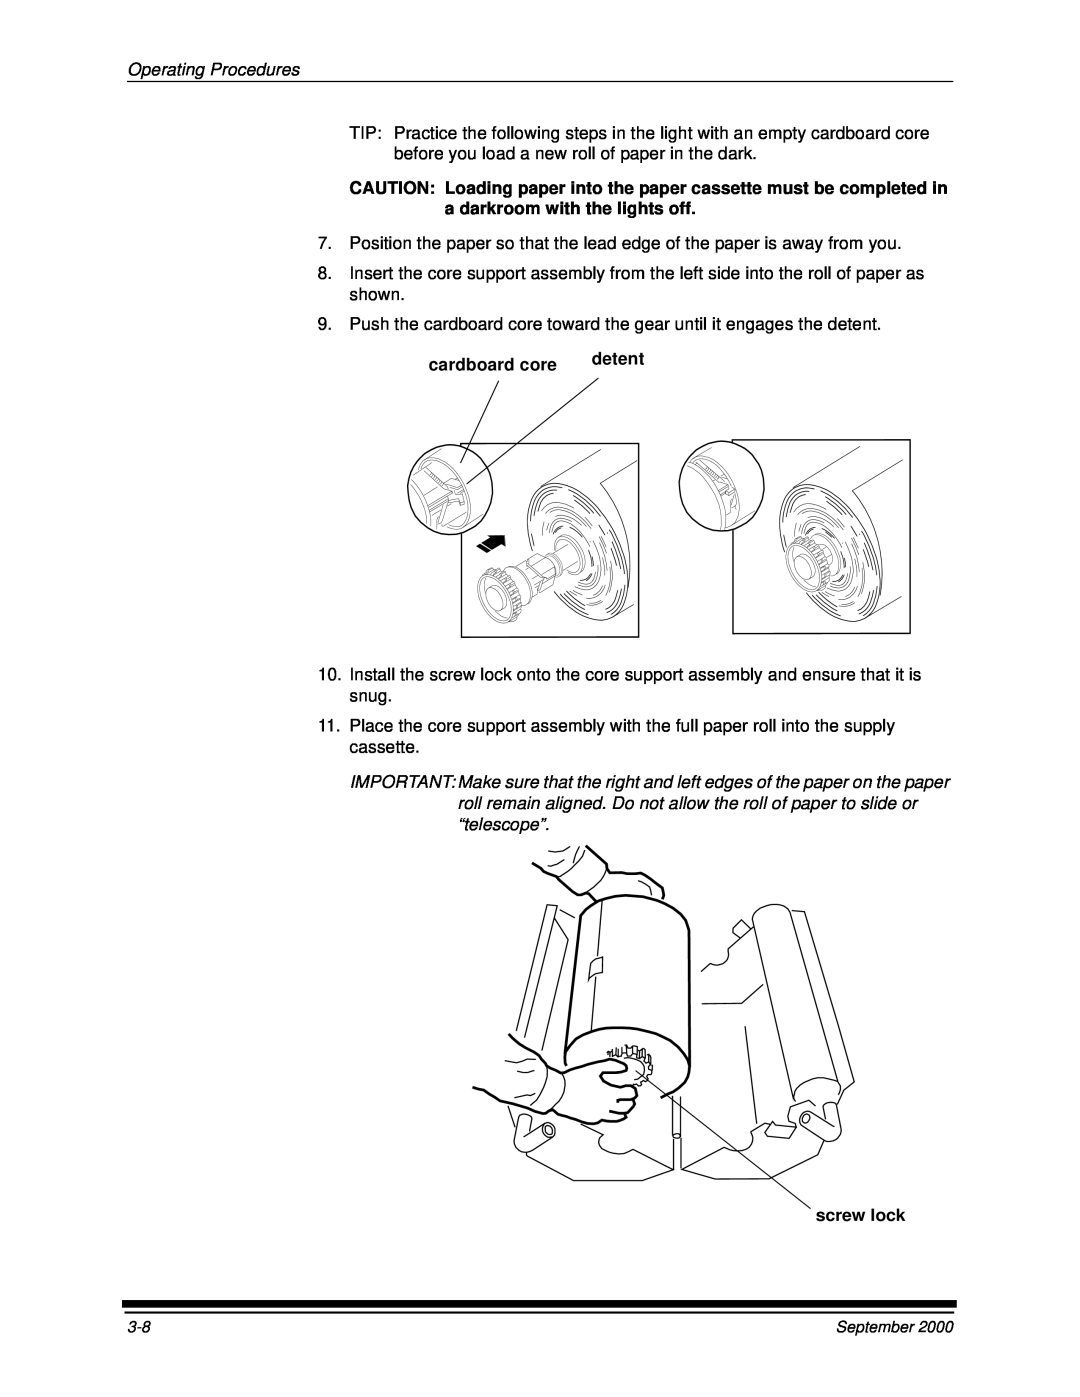 Kodak 20R manual Operating Procedures, cardboard core, detent, screw lock 